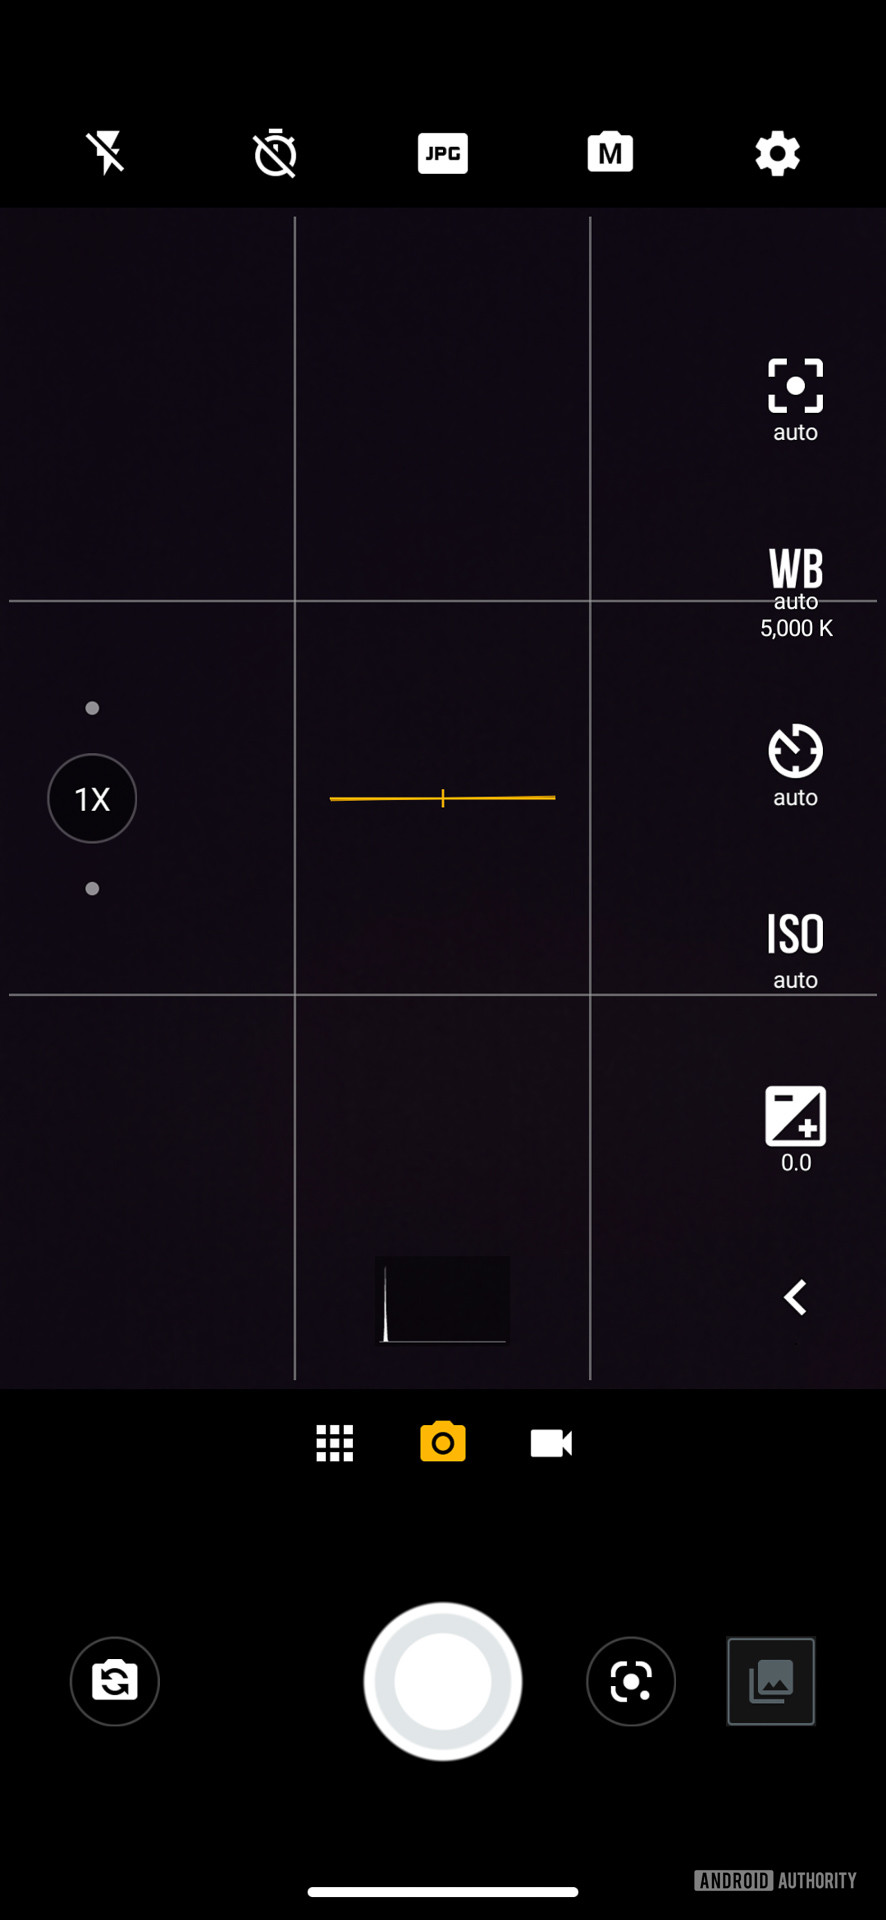 Motorola Edge Plus camera app pro mode